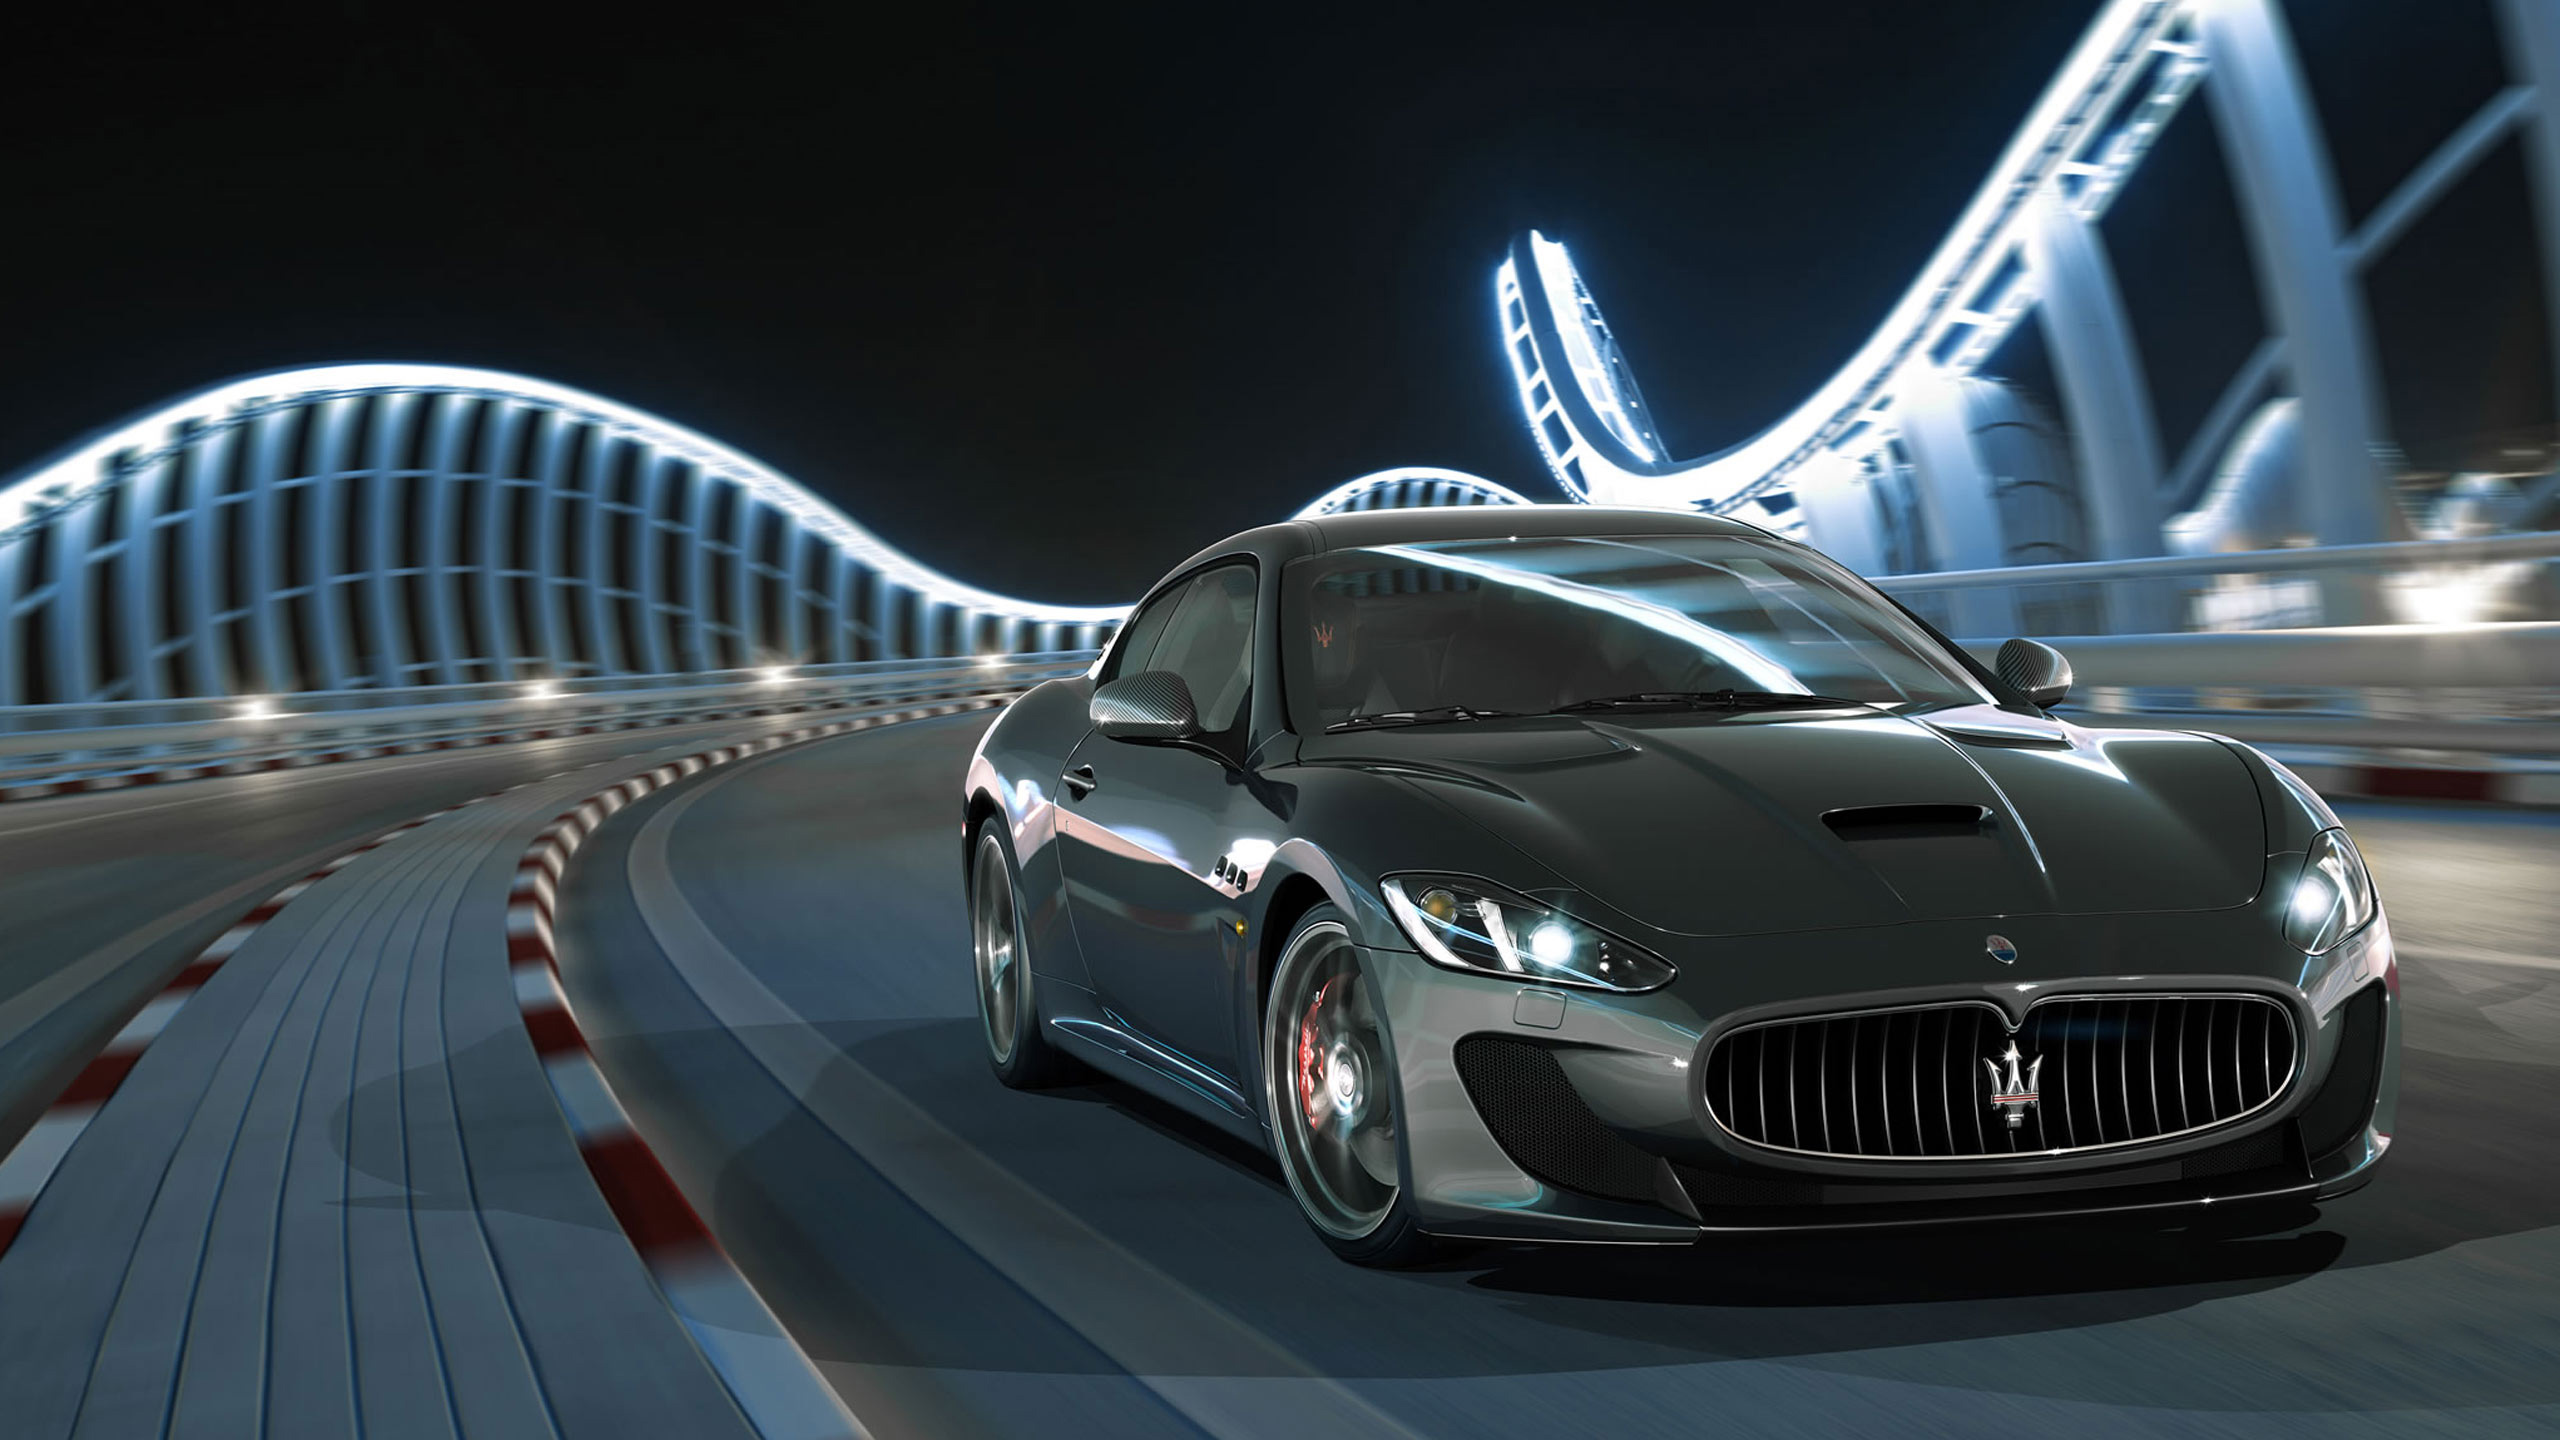 Maserati Gt Mc Stradale Wallpaper Hd Car Wallpapers Id